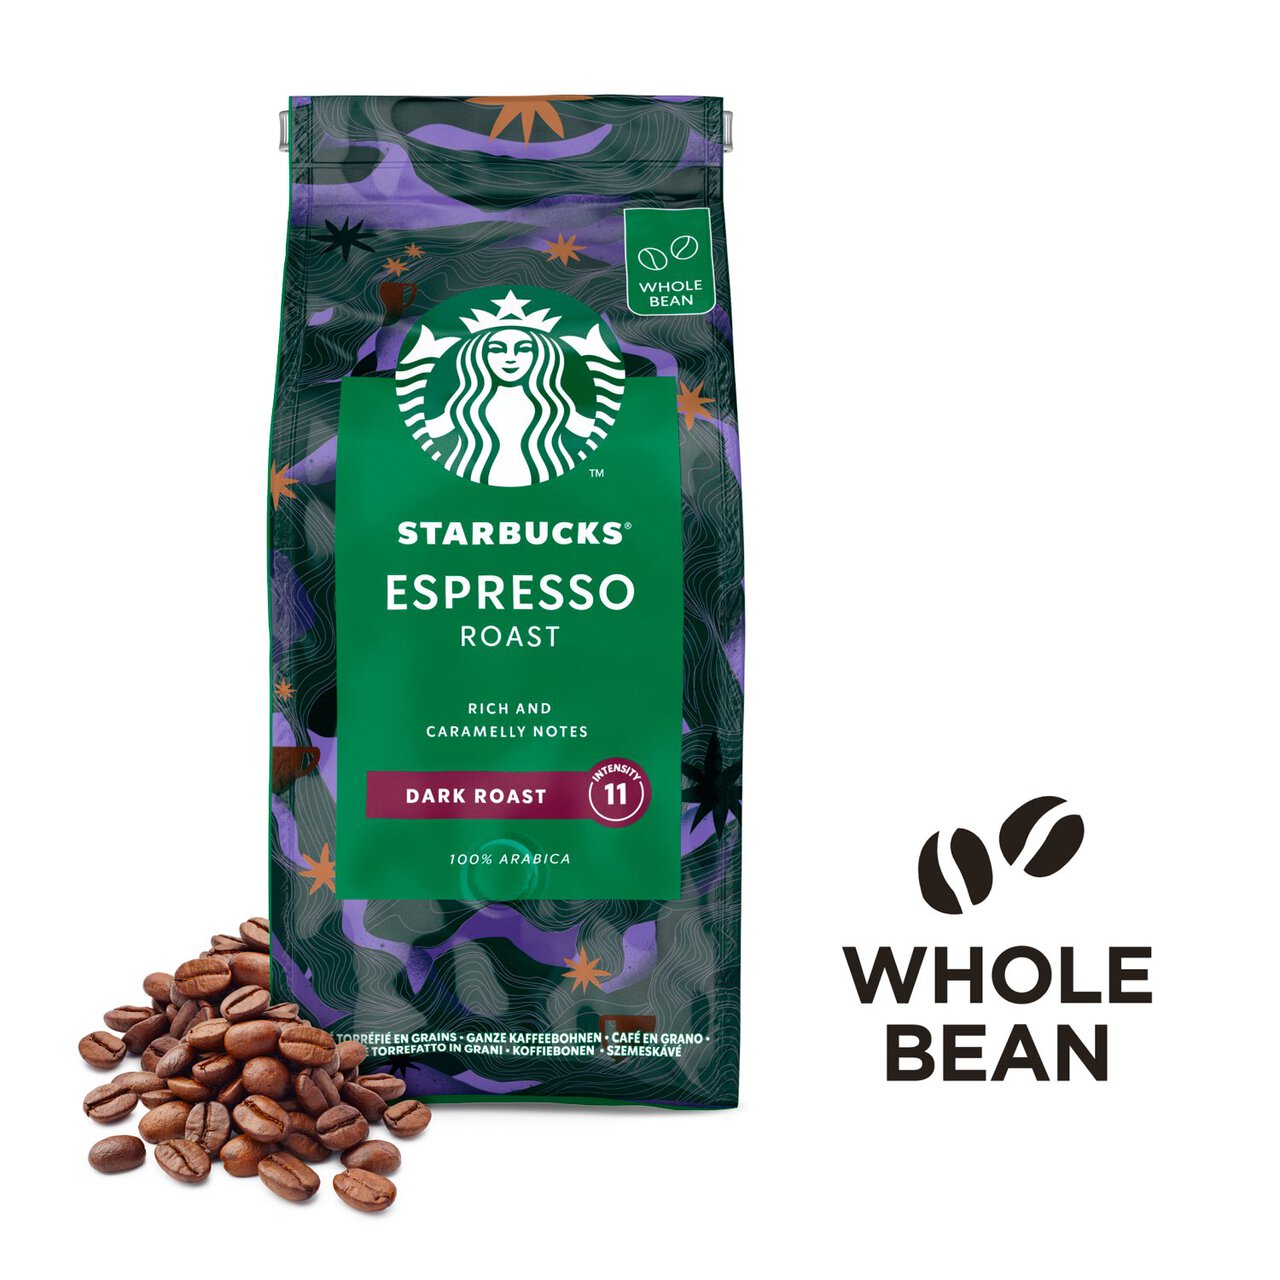 STARBUCKS Espresso Roast, Dark Roast Coffee Beans 200g